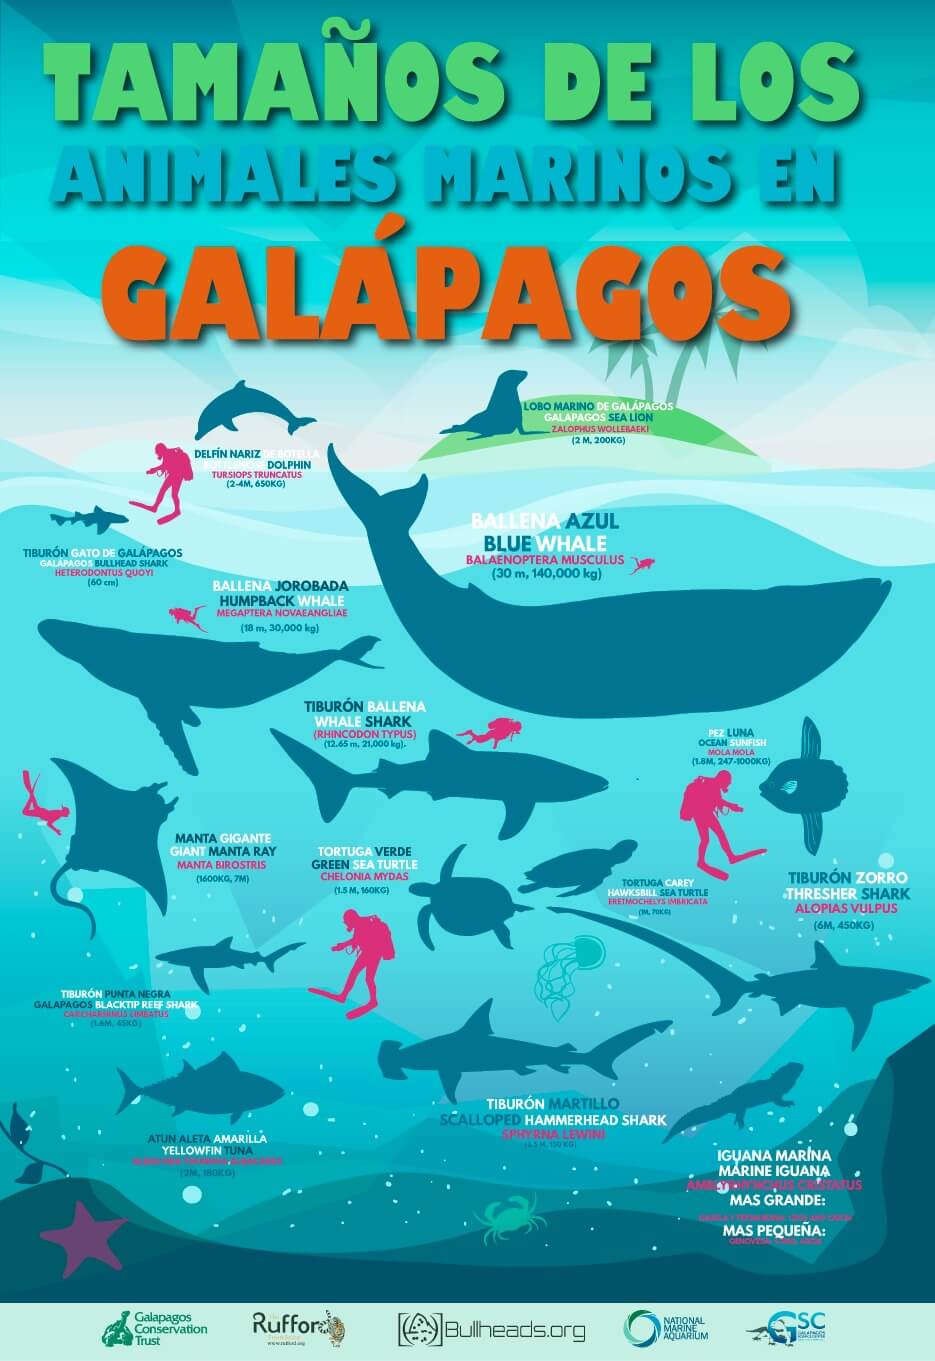 Galapagos Graphics: Sizes of Galapagos marine species